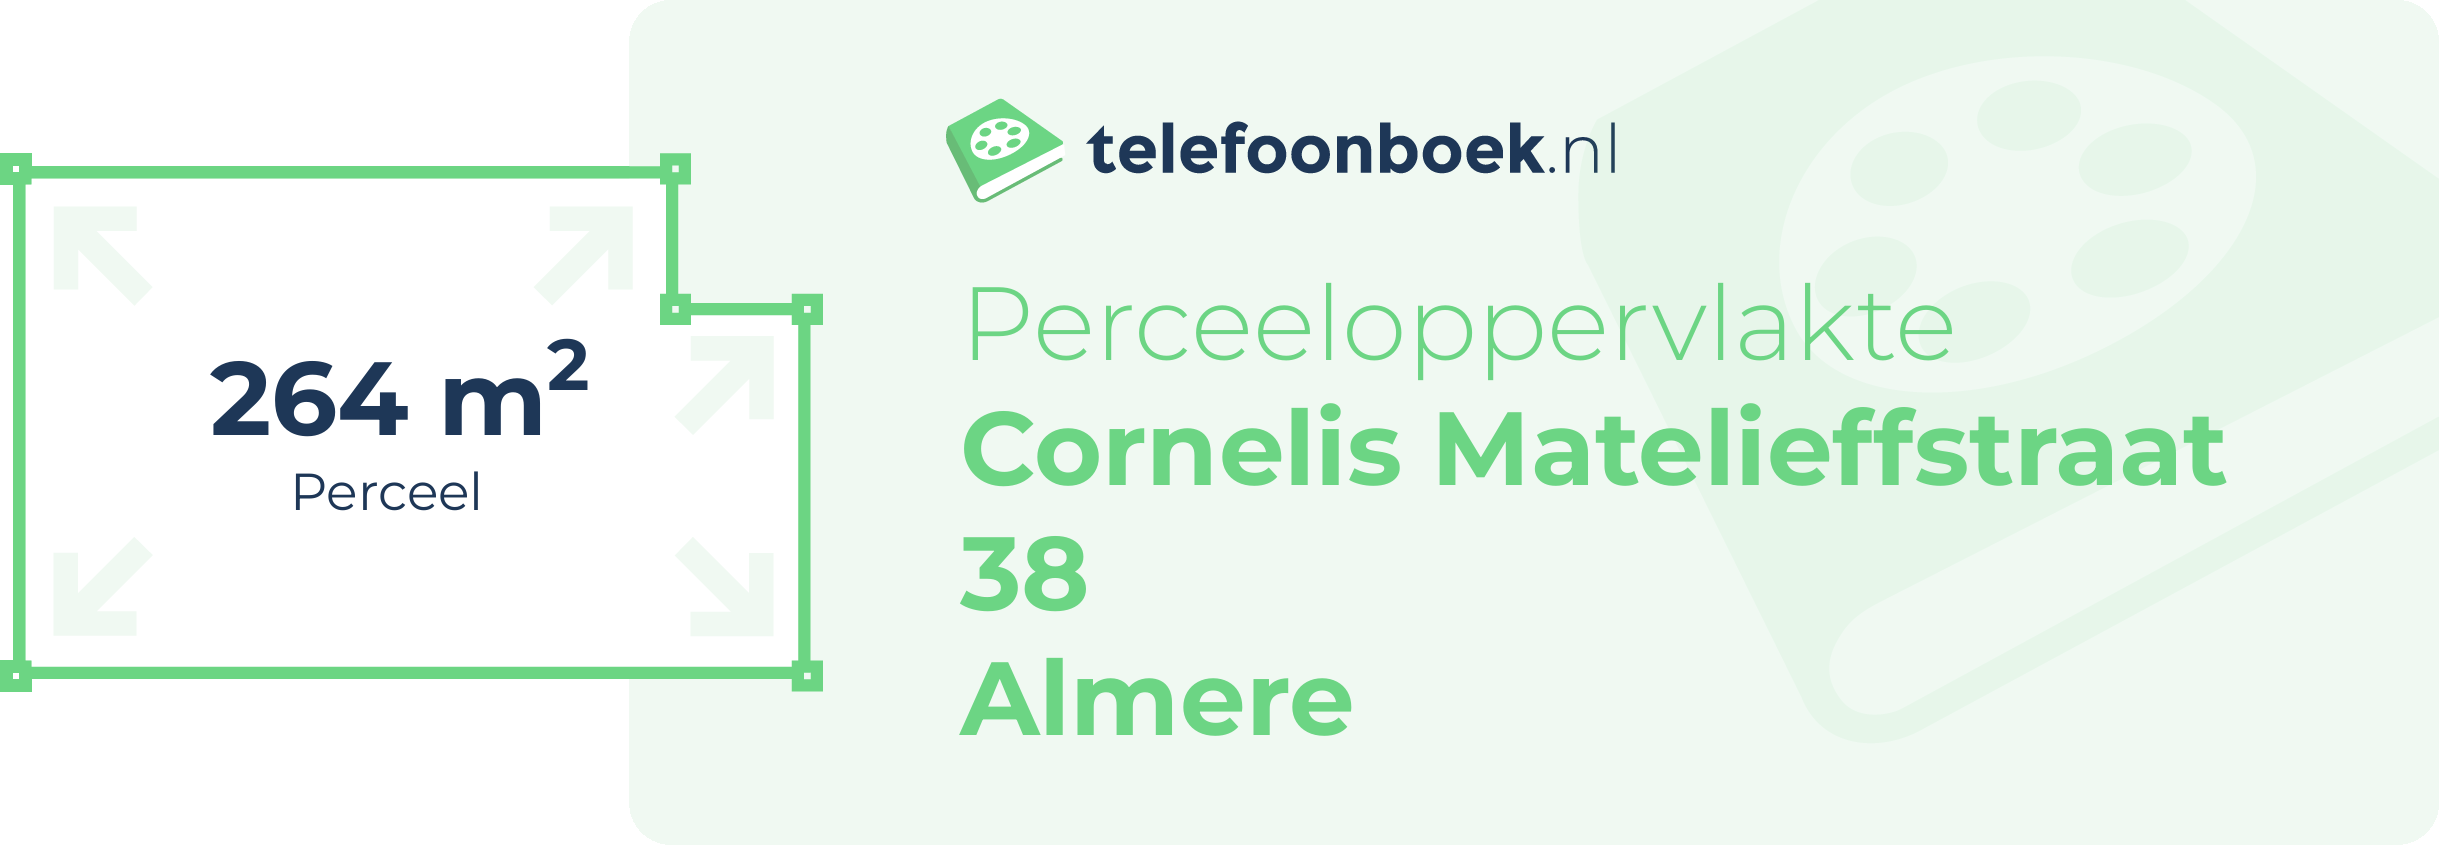 Perceeloppervlakte Cornelis Matelieffstraat 38 Almere